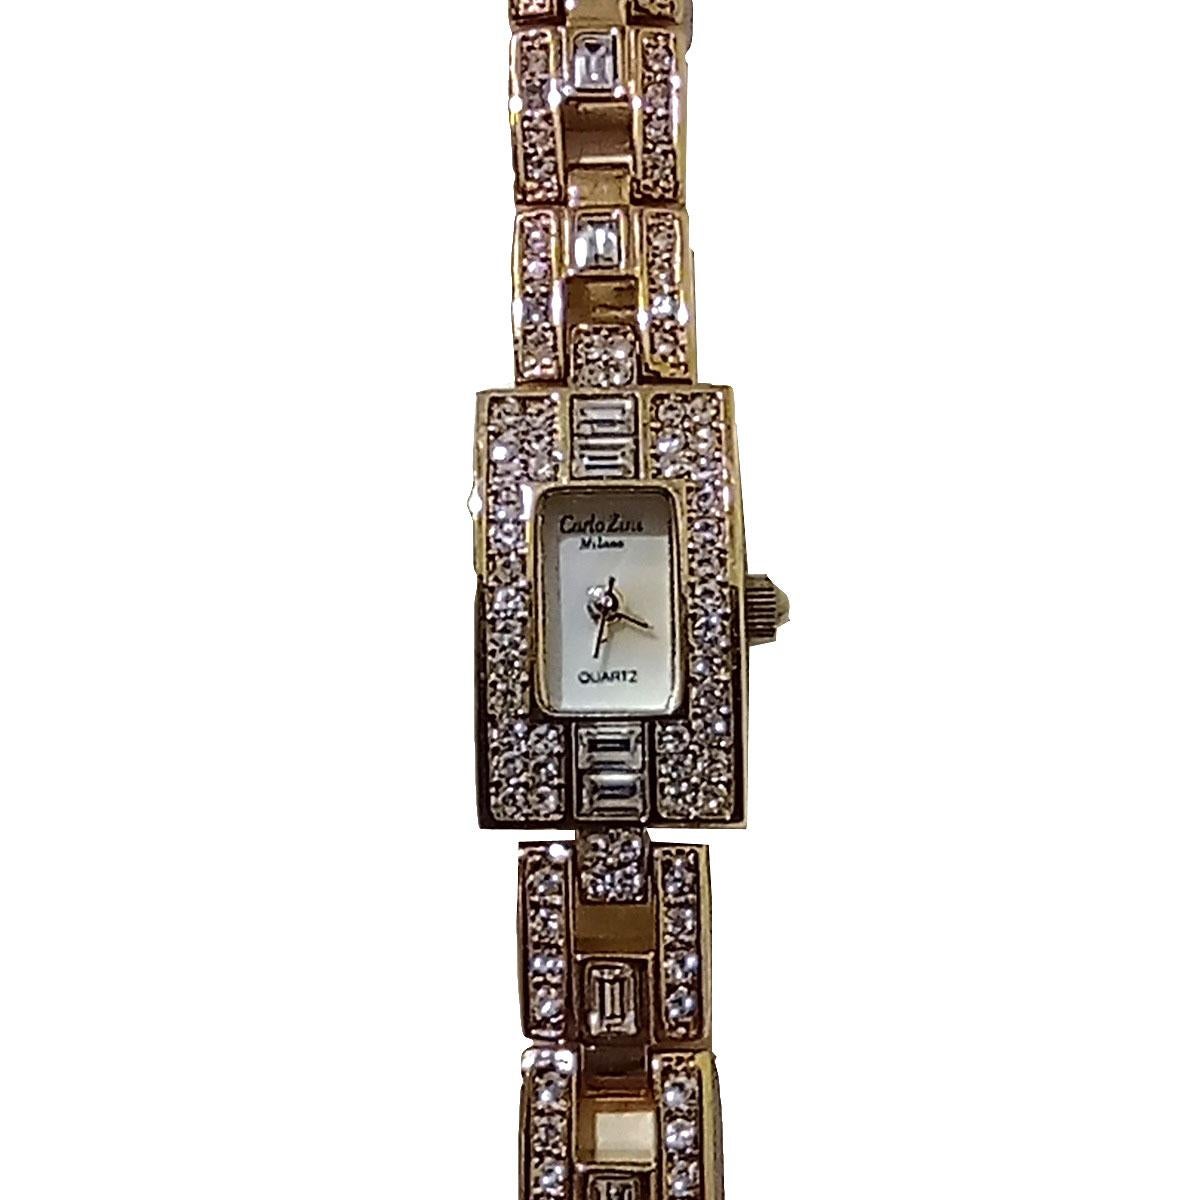 Carlo Zini Golden Jewel Watch In New Condition For Sale In Gazzaniga (BG), IT